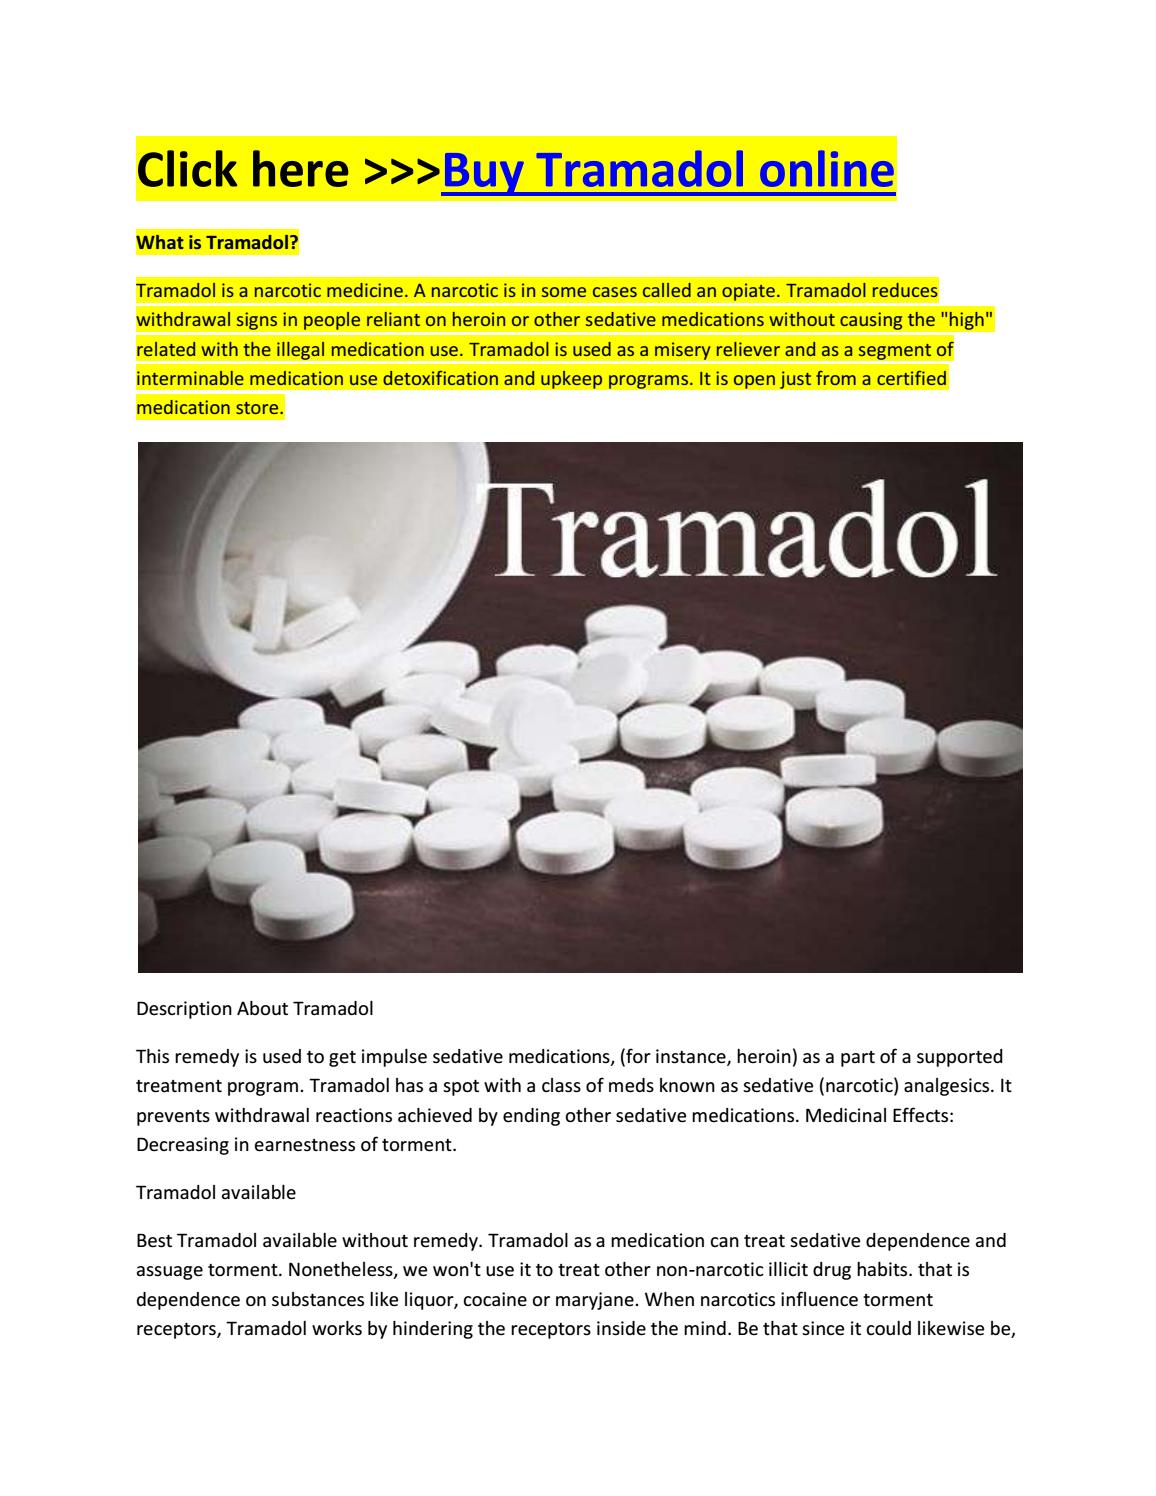 Tramadol Online Medication